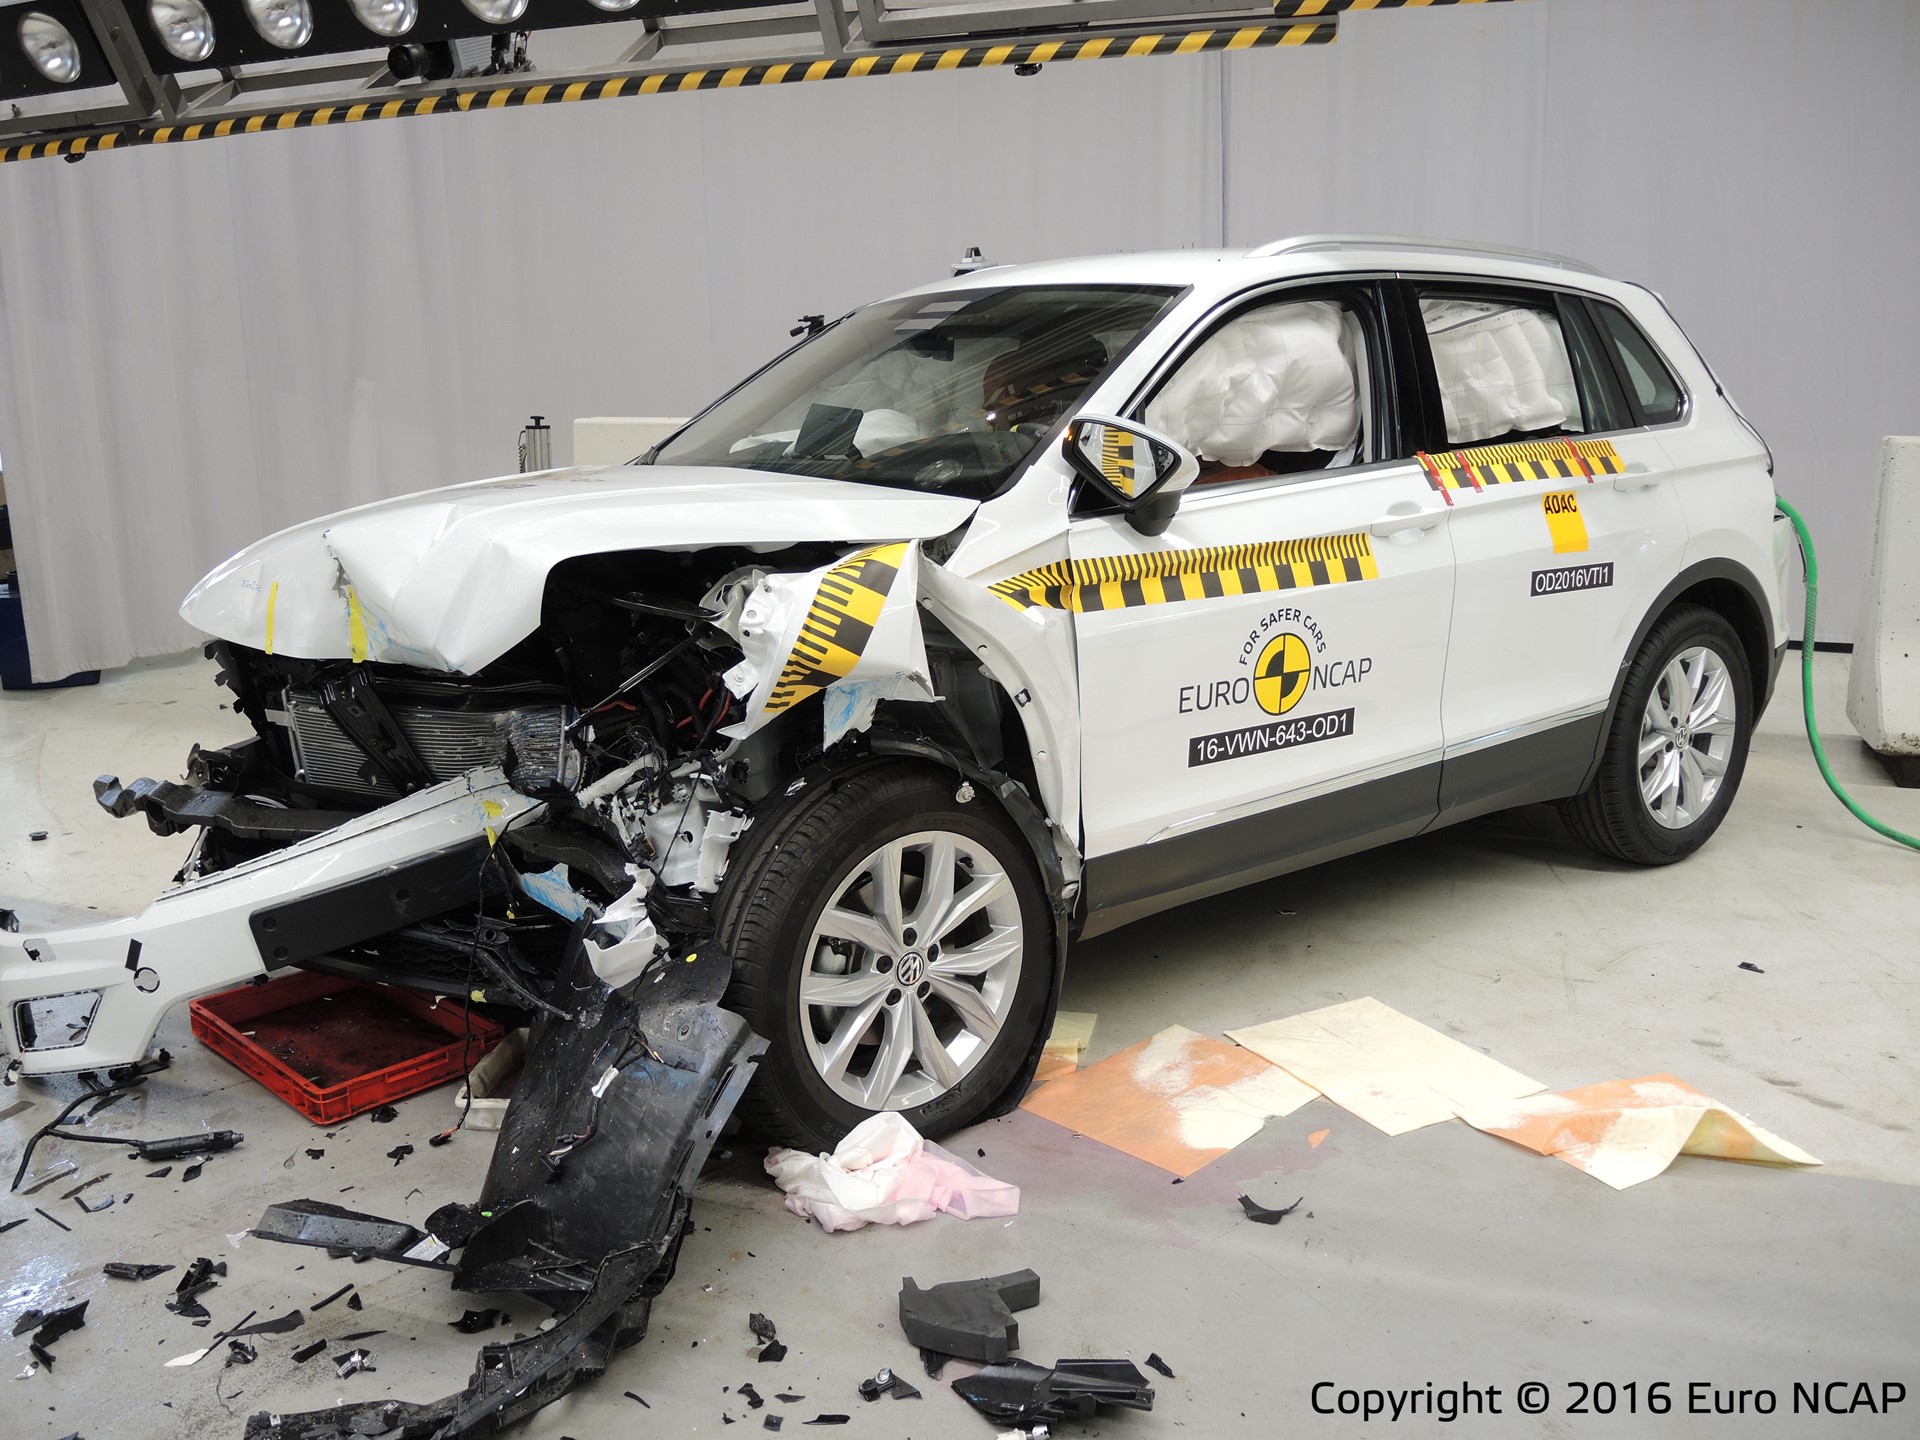 Volkswagen Tiguan Frontal Offset Impact Test 16 After Crash